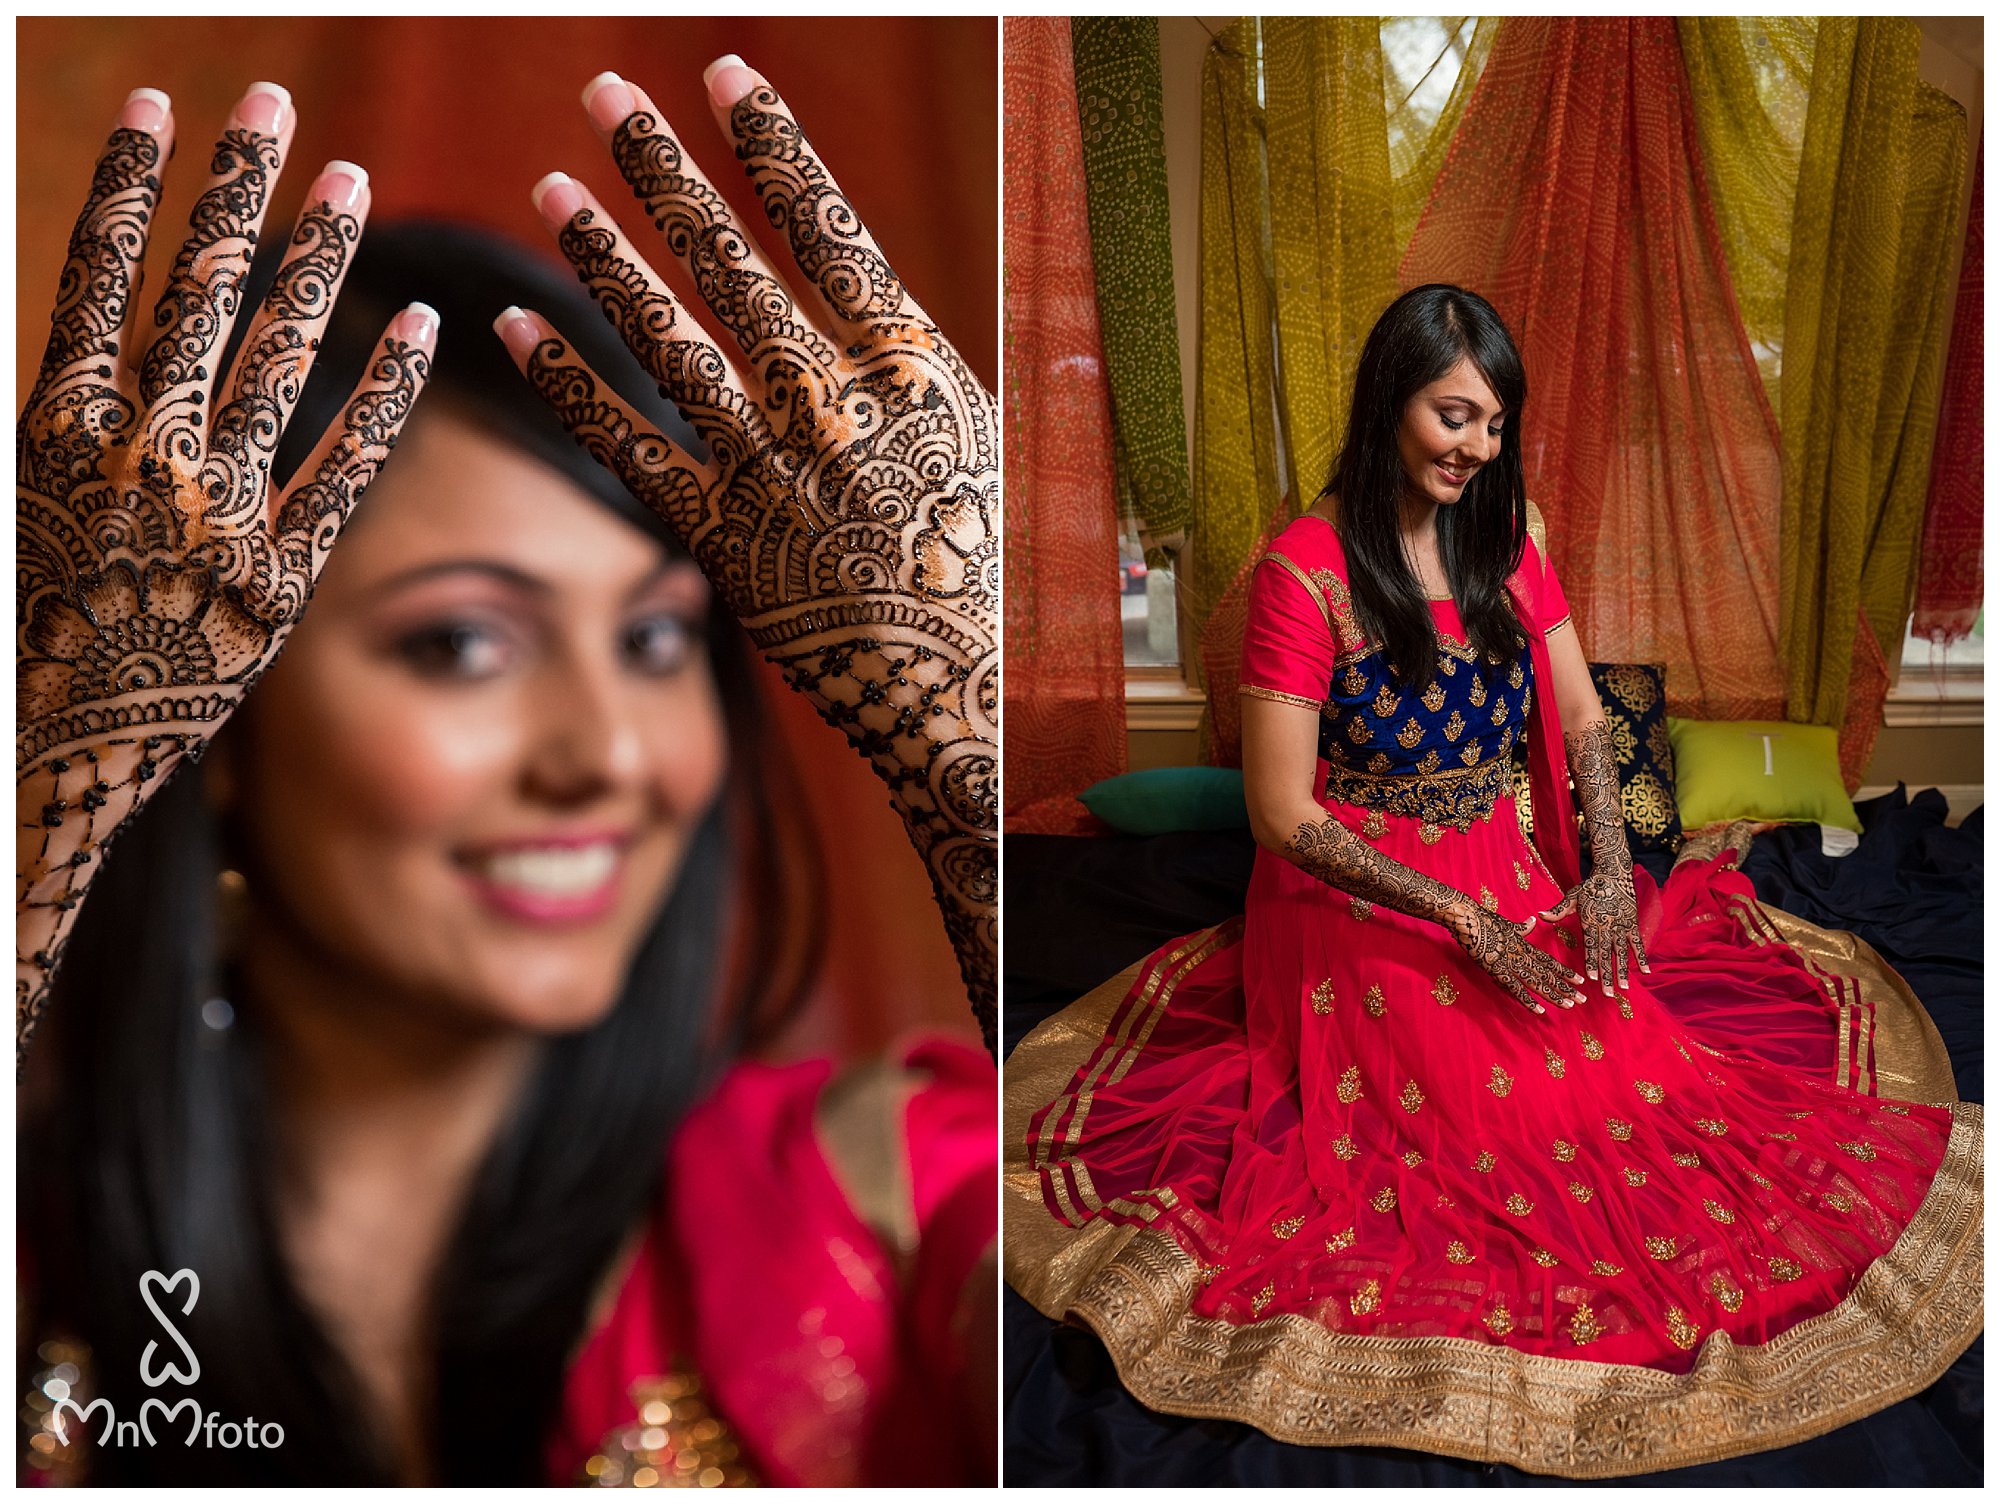 Indian wedding photos hi-res stock photography and images - Alamy